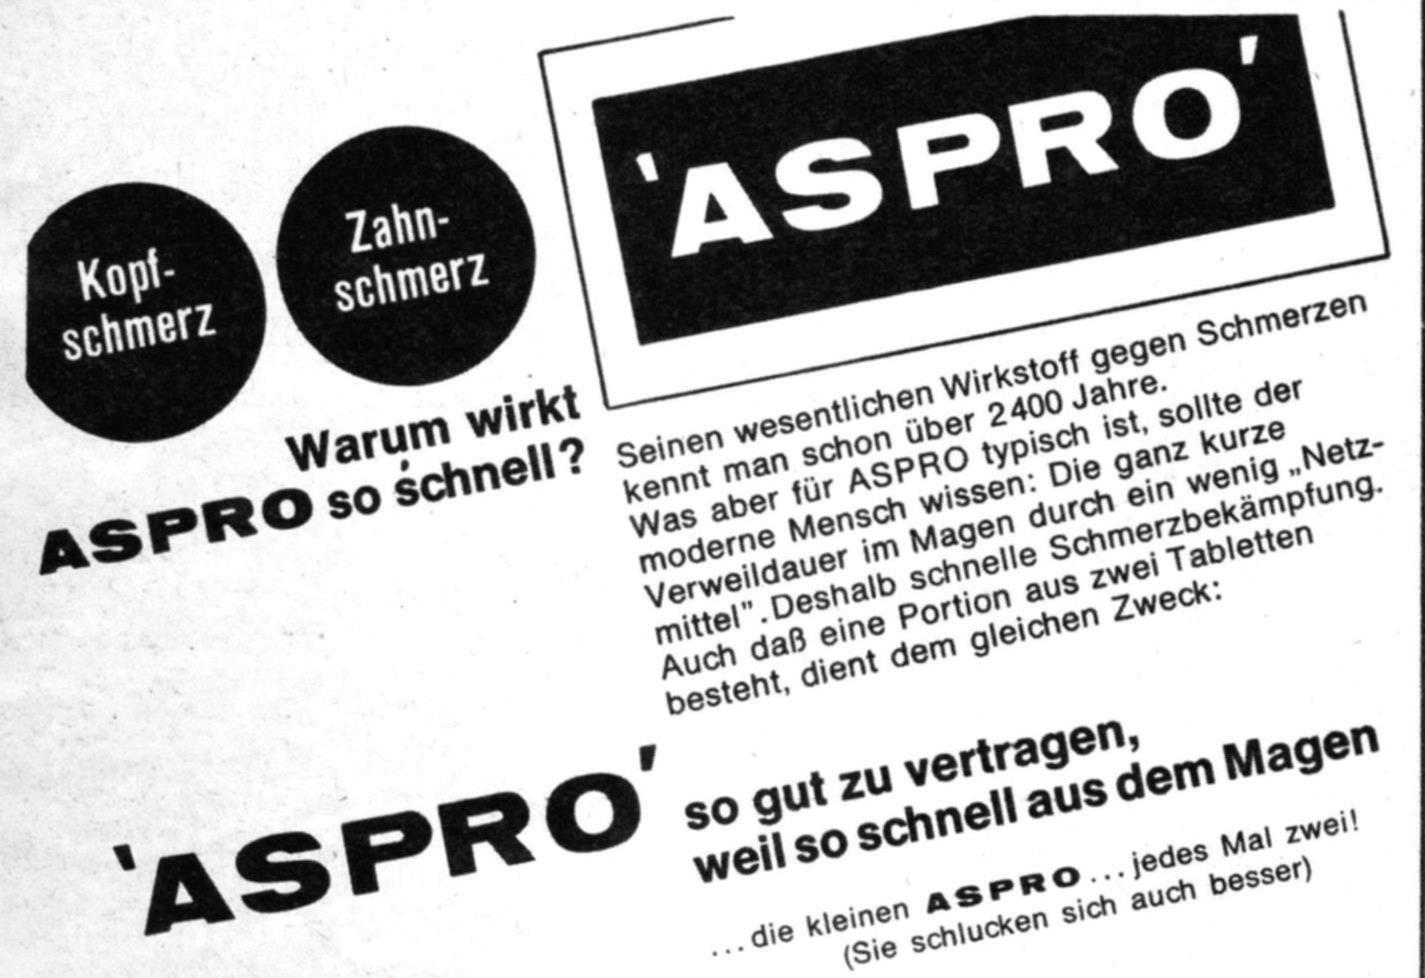 Aspro 1964 071.jpg